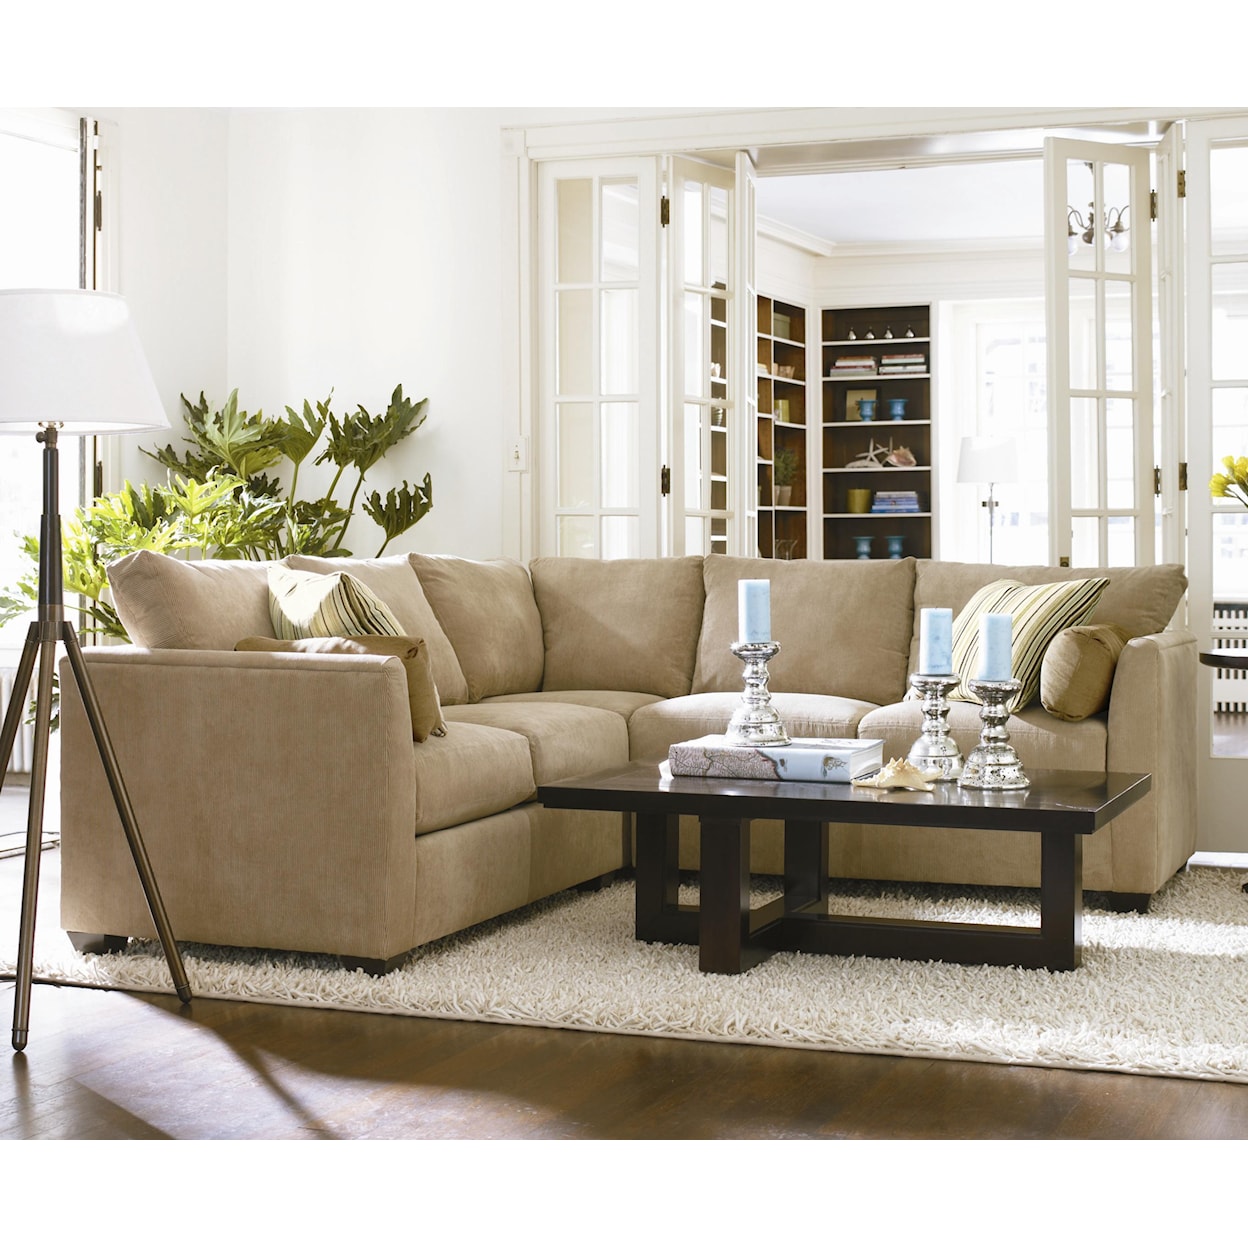 Norwalk Horizon Sectional Sofa